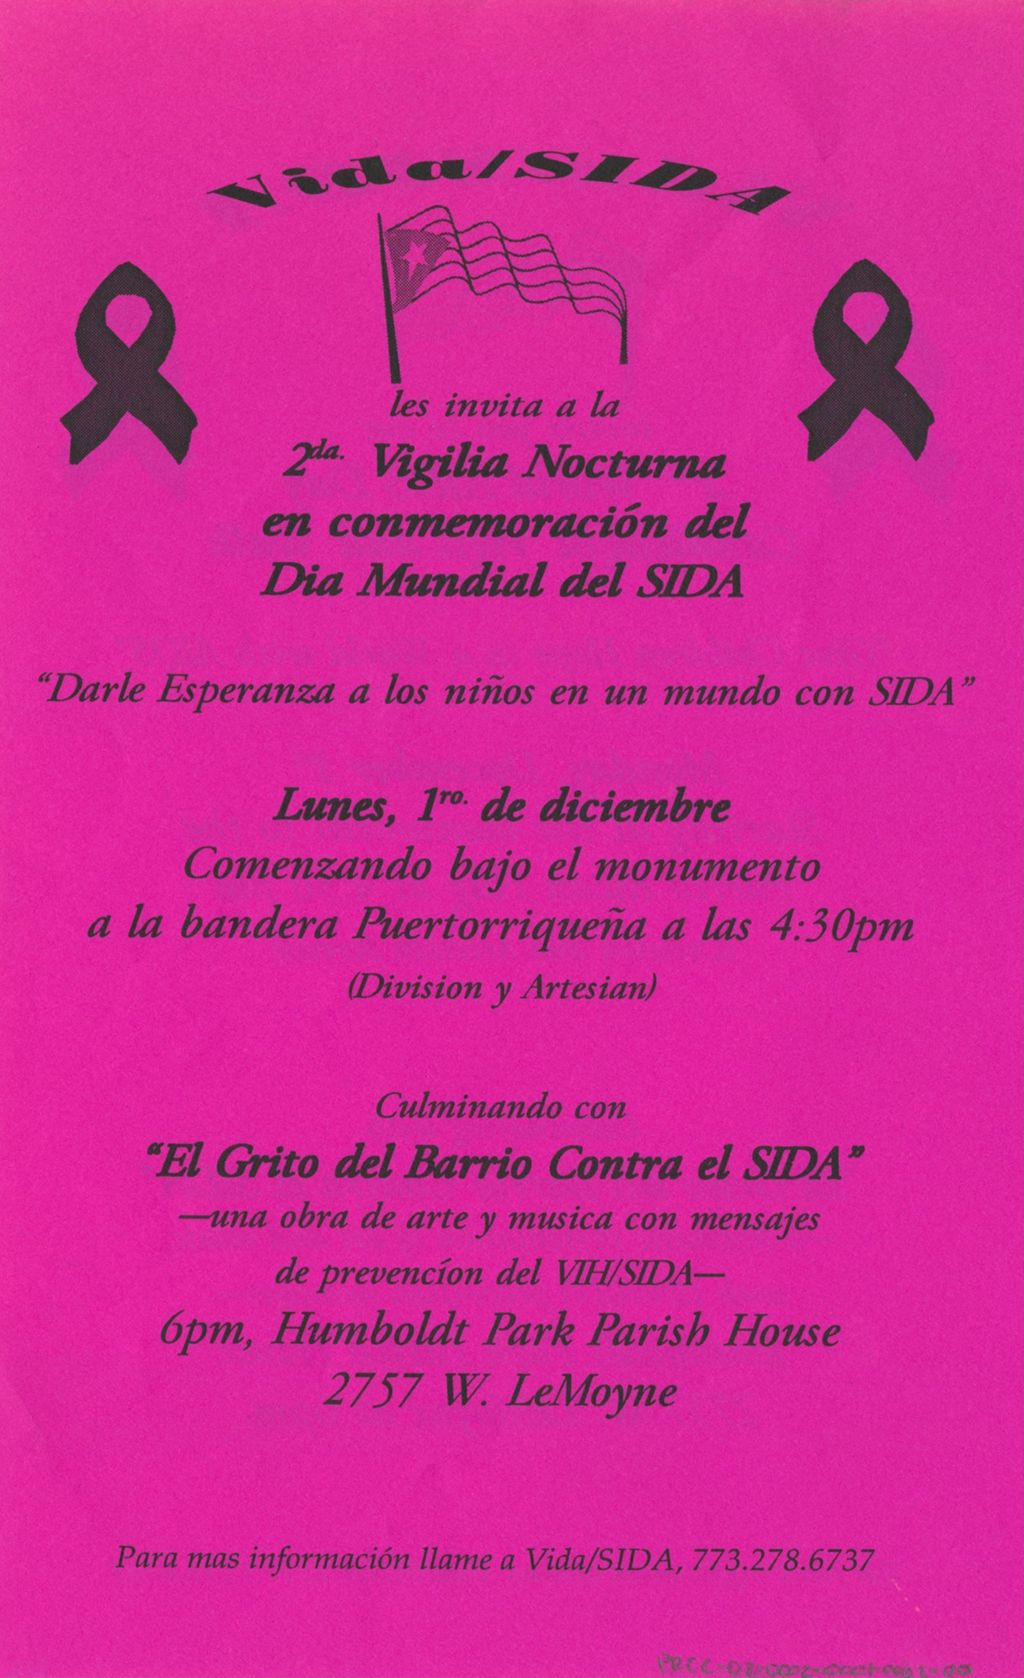 Miniature of VIDA/SIDA flyer